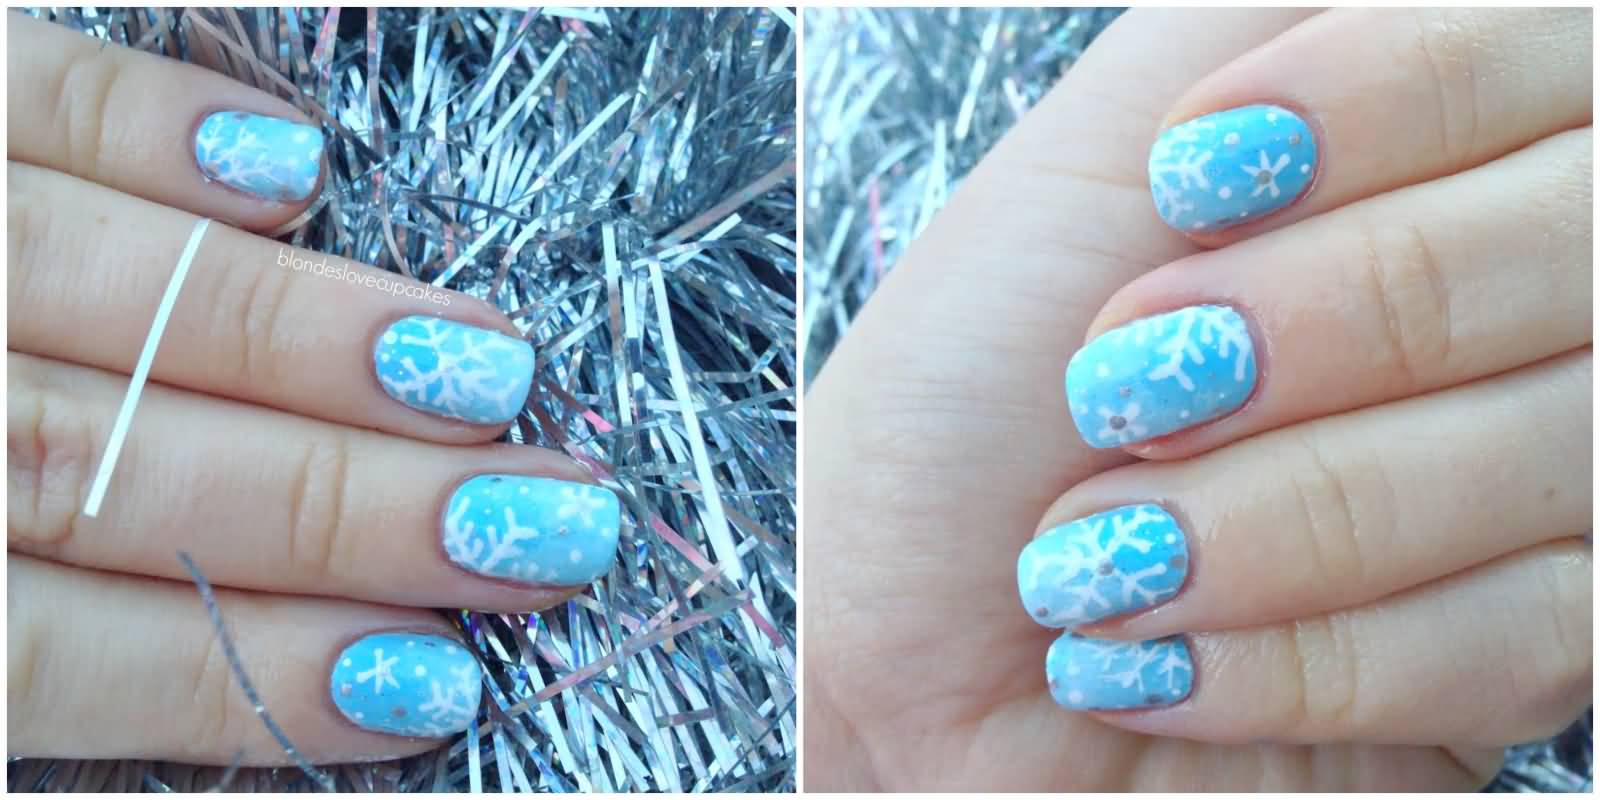 Light Blue Nails With White Snowflakes Design Nail Art